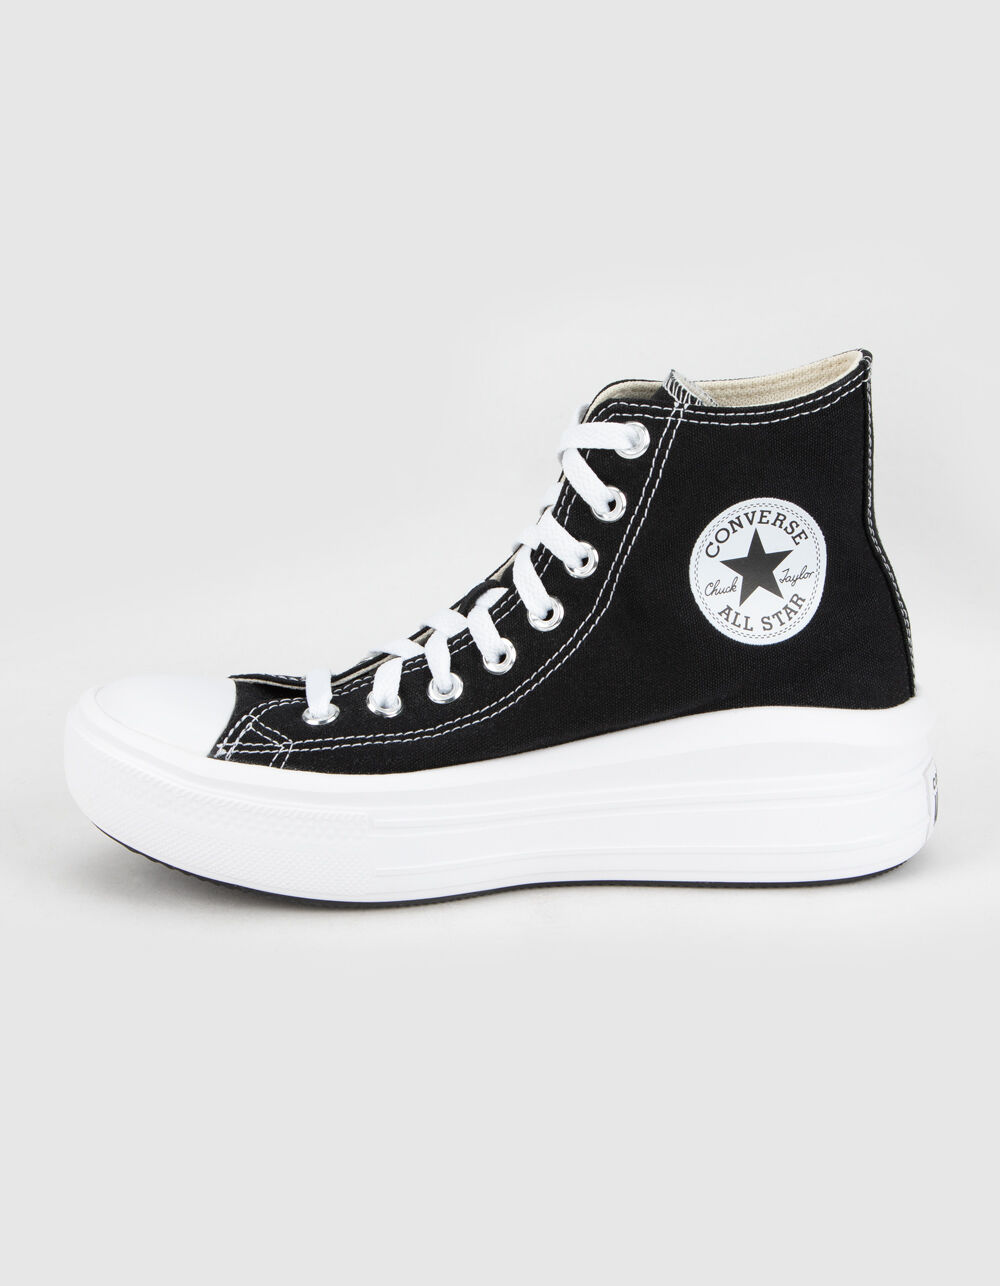 Converse Chuck Taylor All Star Black High Top Shoes